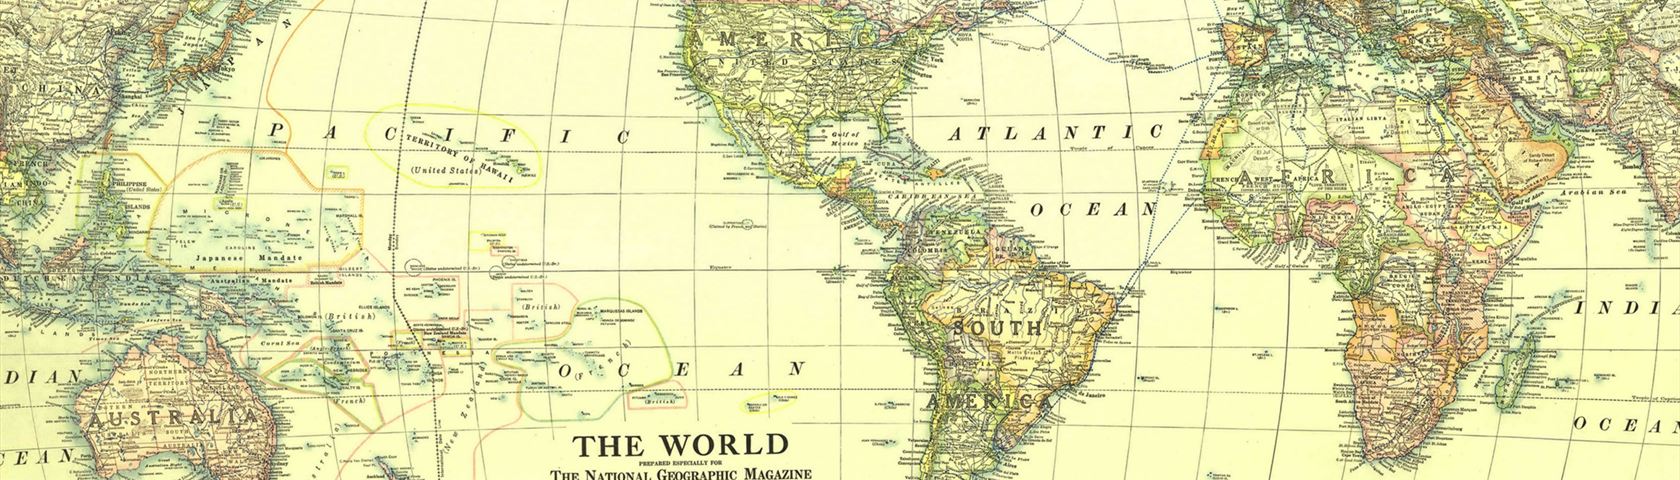 The World 1922